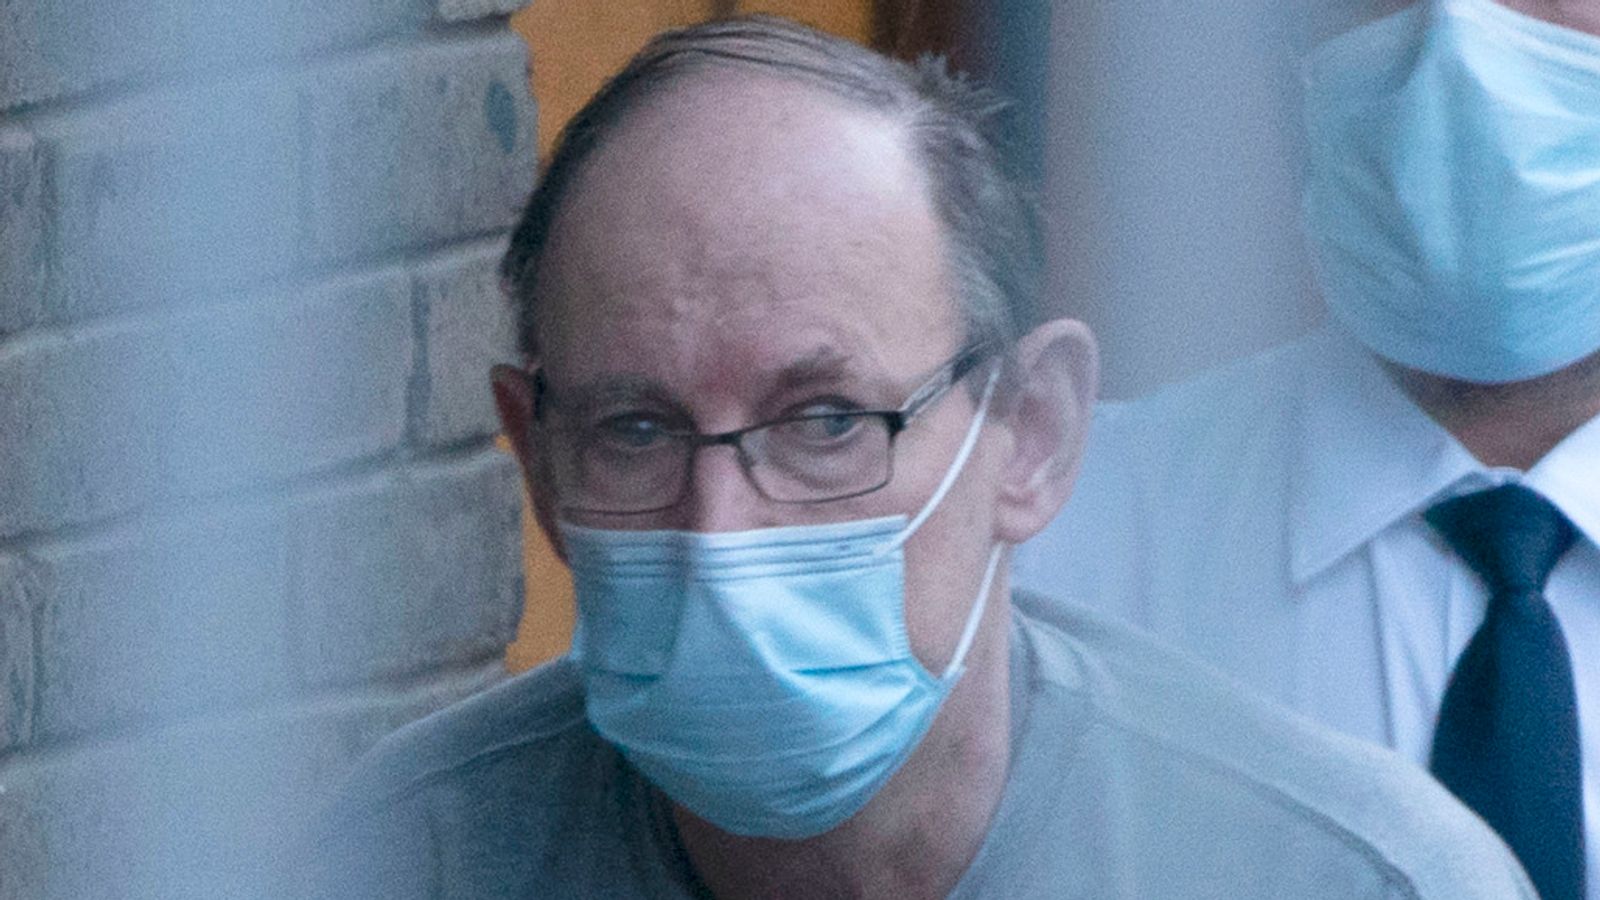 David Fuller: Istri pembunuh yang ‘bingung’ yang menyalahgunakan mayat di kamar mayat mengatakan dia meninggalkannya setelah ditangkap |  Berita Inggris